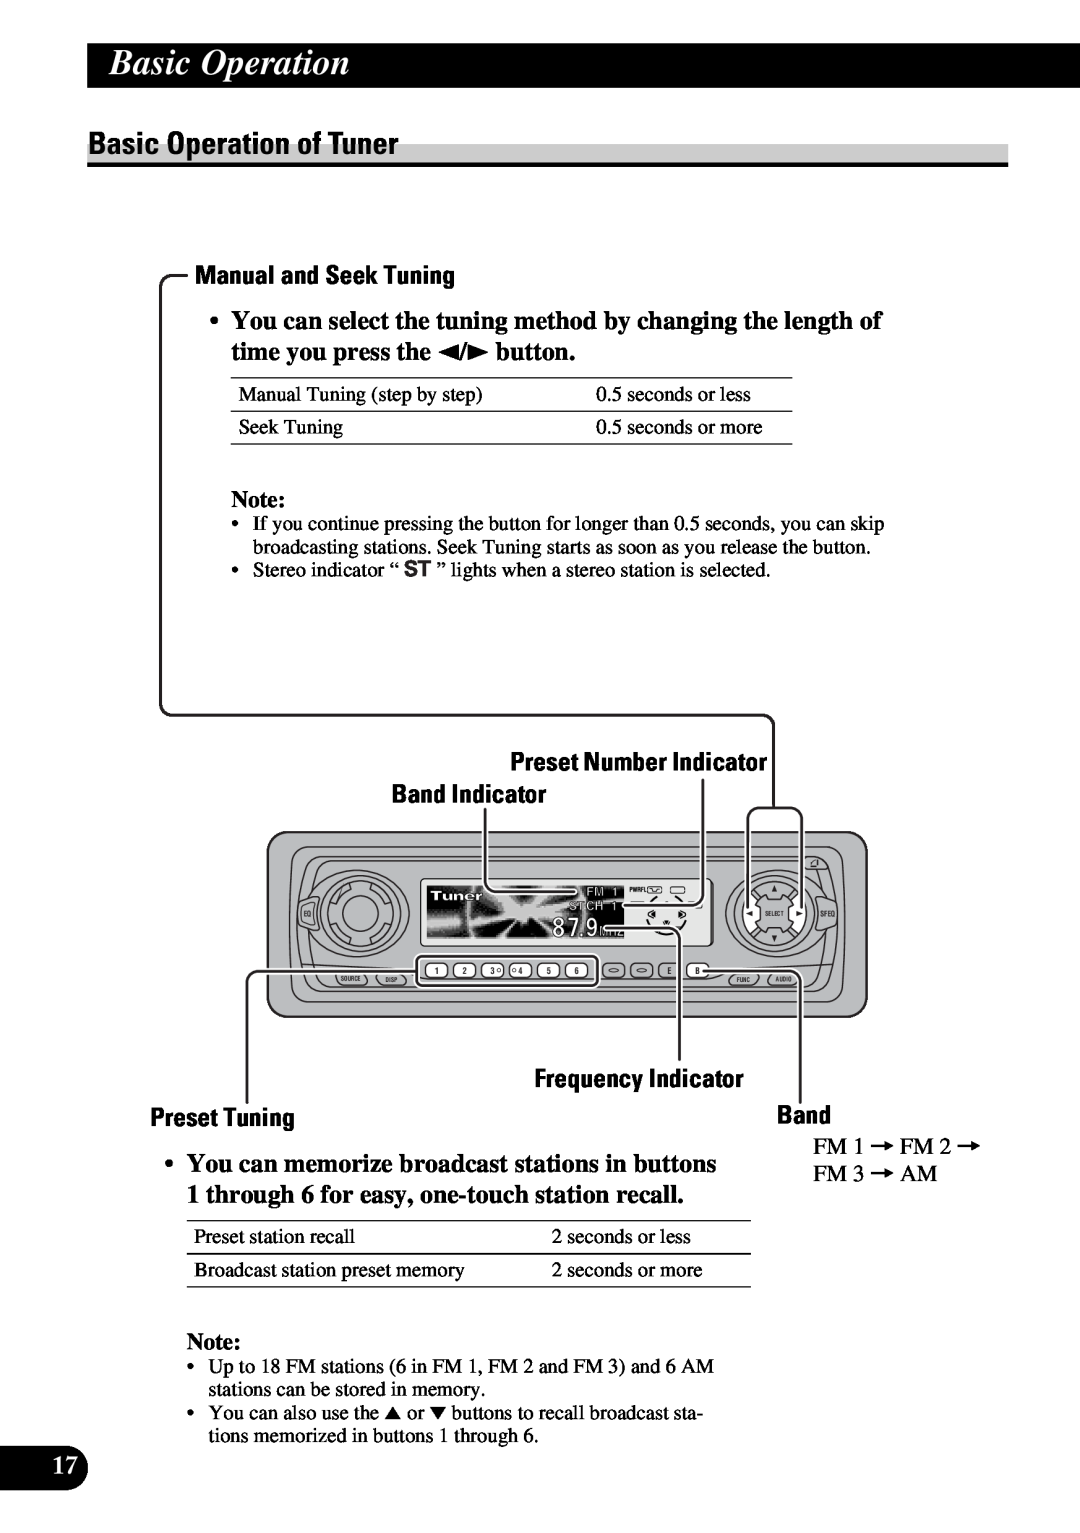 Pioneer DEH-P730 Basic Operation of Tuner, Manual and Seek Tuning, Preset Number Indicator Band Indicator, Preset Tuning 